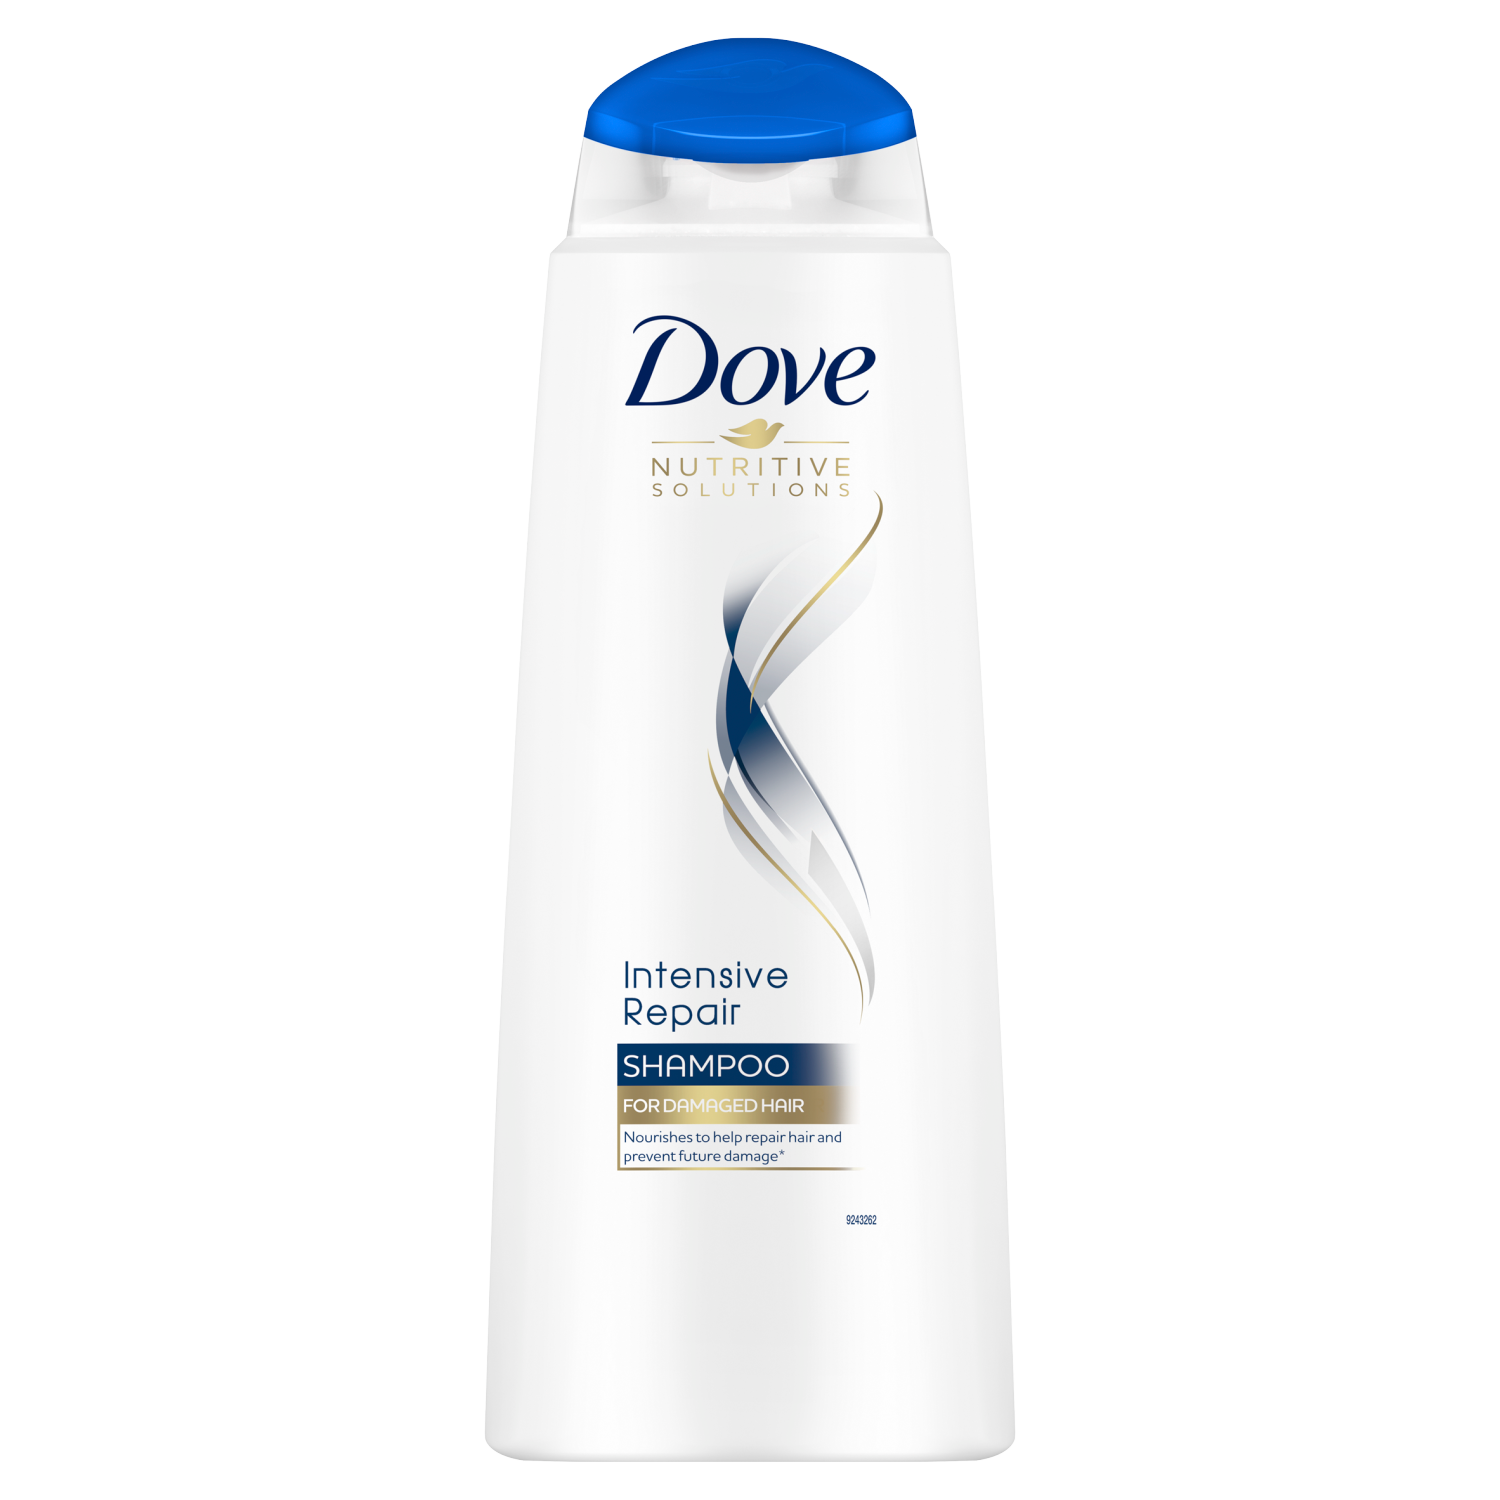 Dove Nutritive Solutions Intensive Repair шампунь для интенсивного восстановления волос, 400 мл dove intensive repair shampo 400 ml